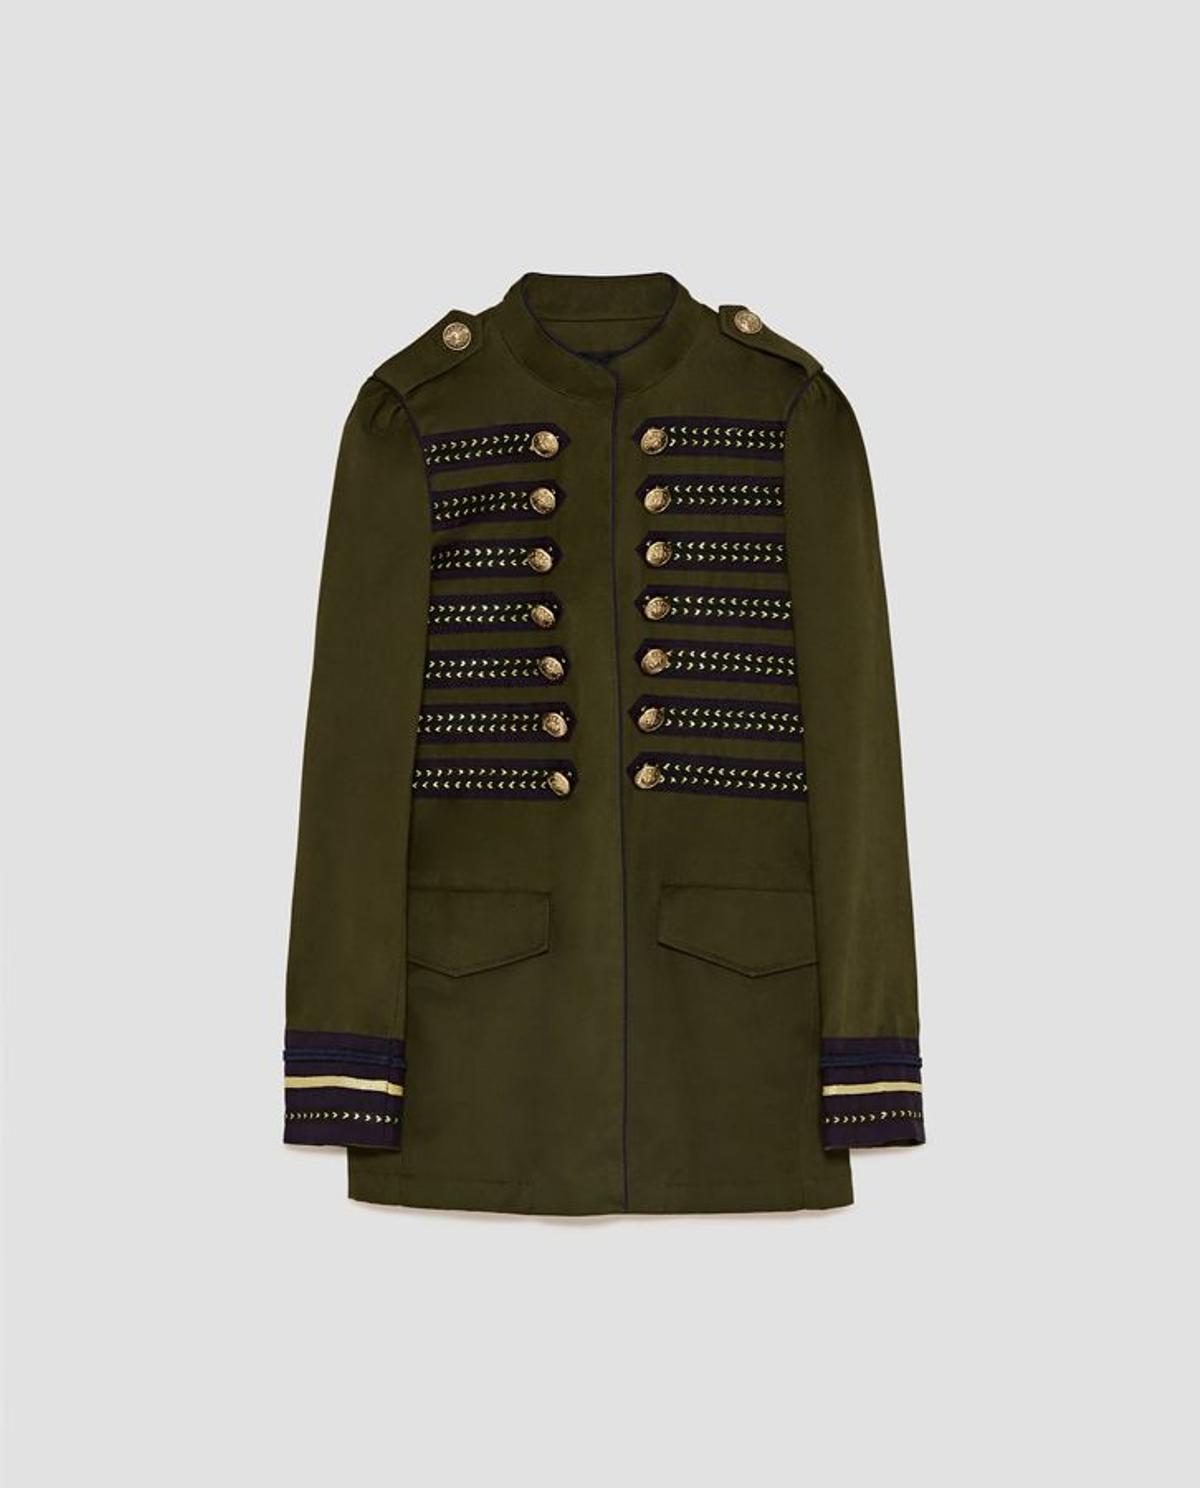 'Shopping' para el Black Friday: chaqueta militar de Zara